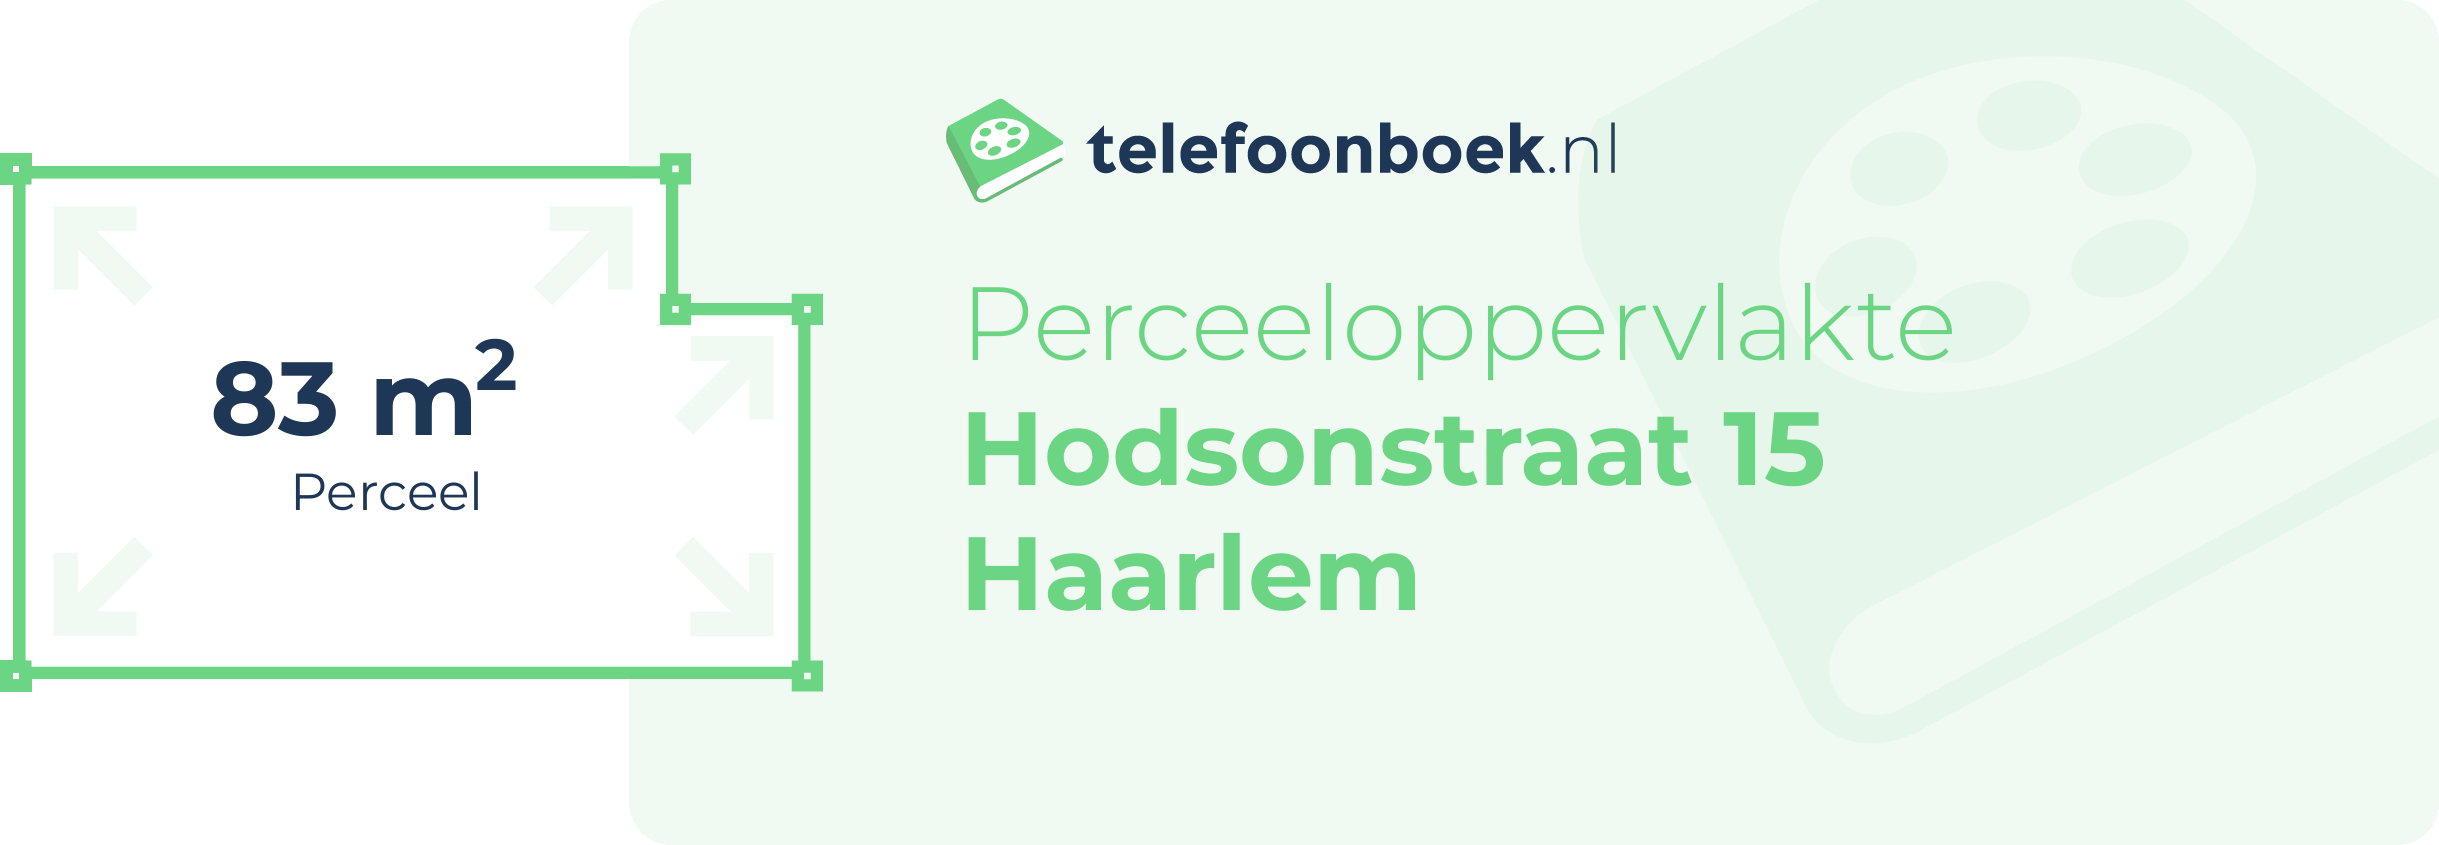 Perceeloppervlakte Hodsonstraat 15 Haarlem